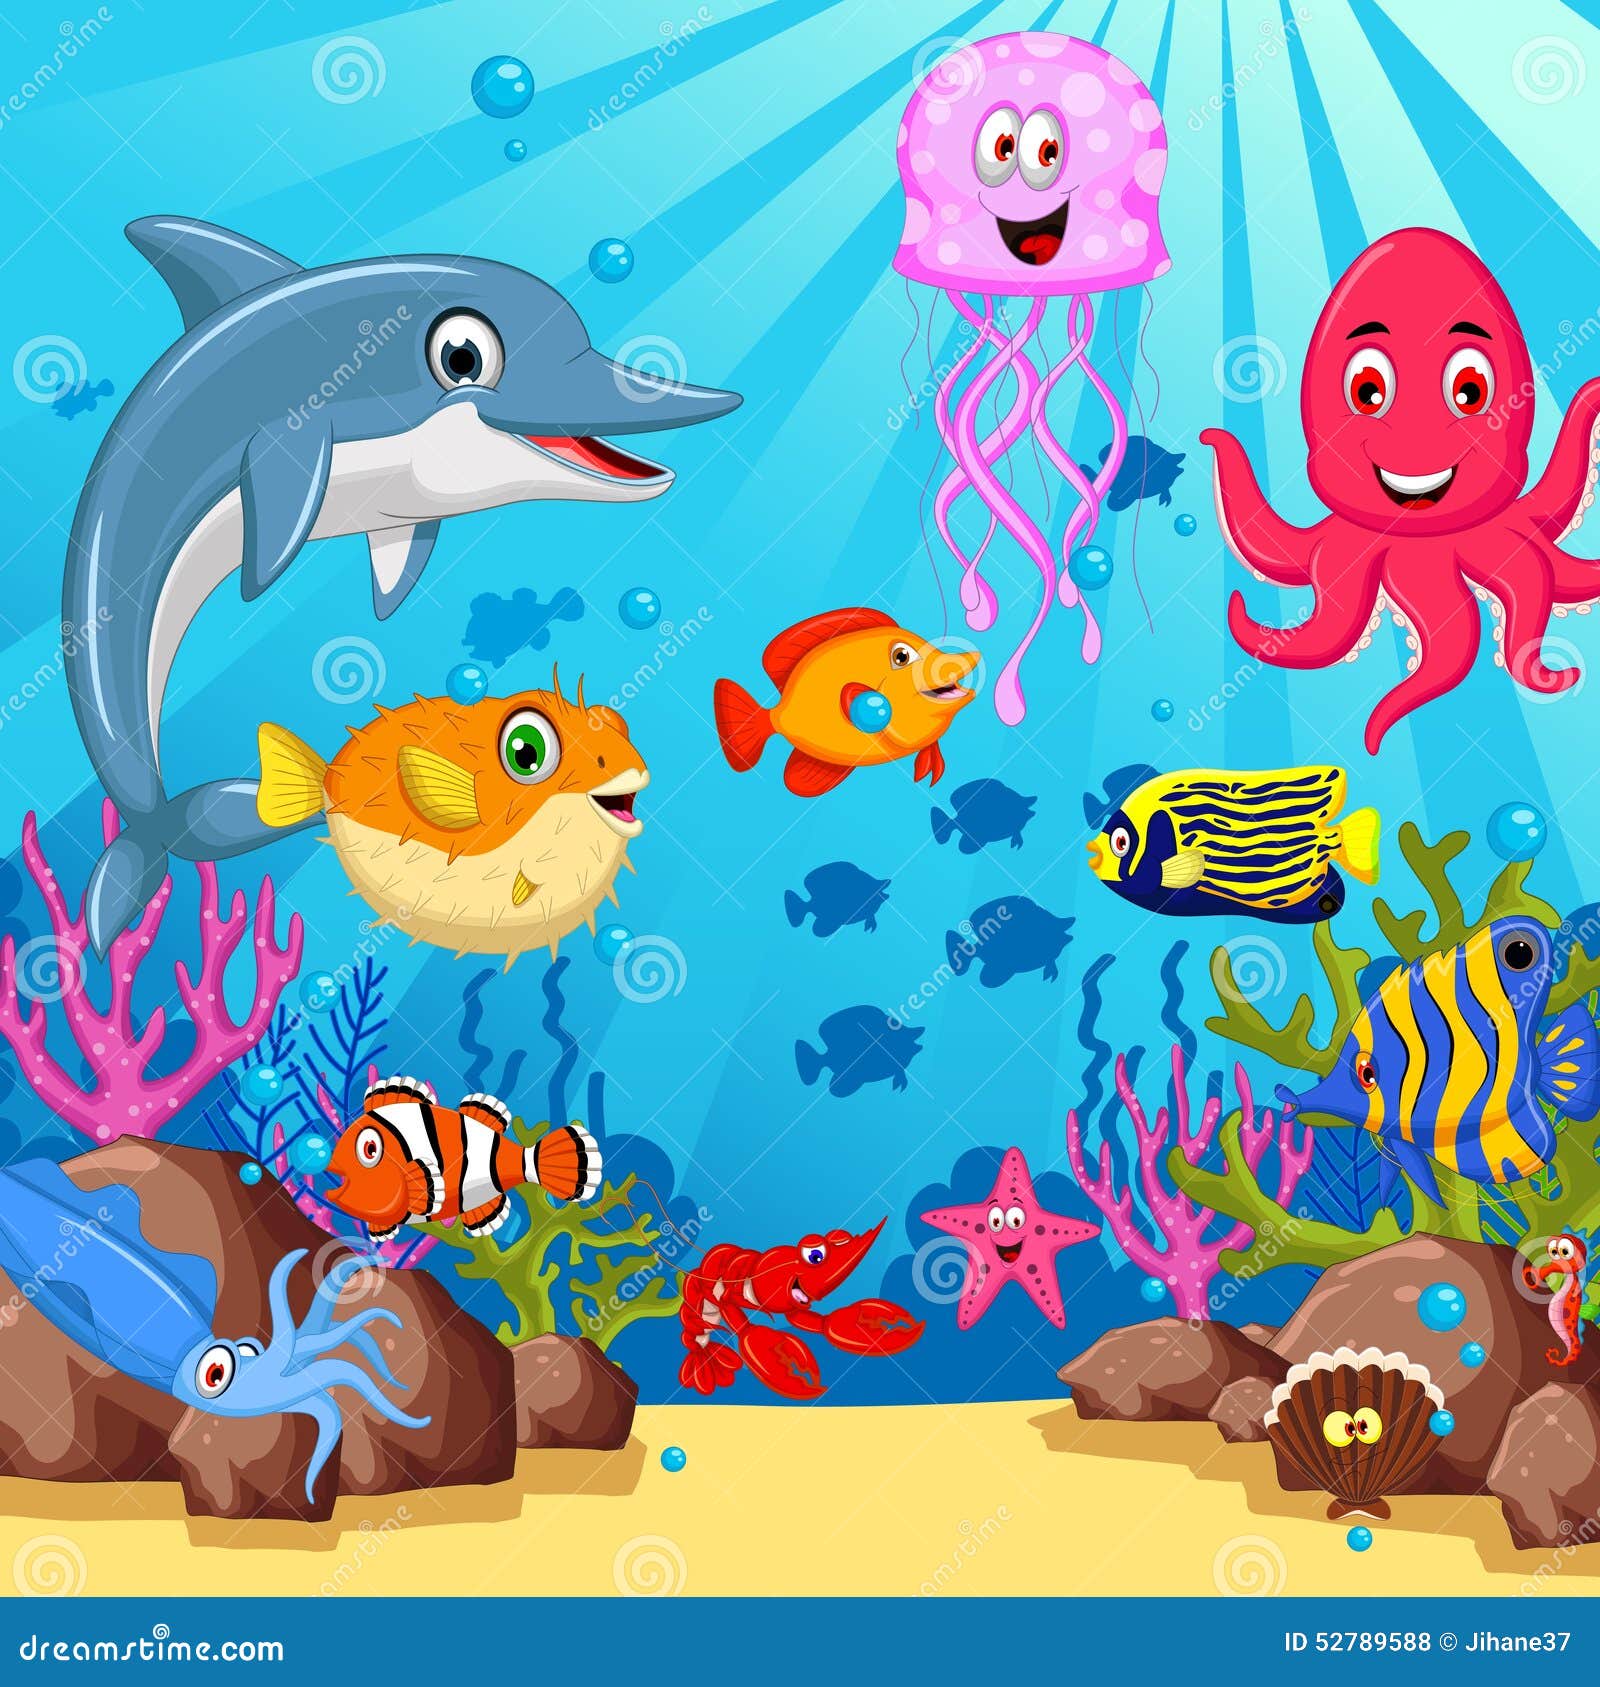 Funny Cartoon Sea Life For You Design Stock Illustration - Image: 52789588